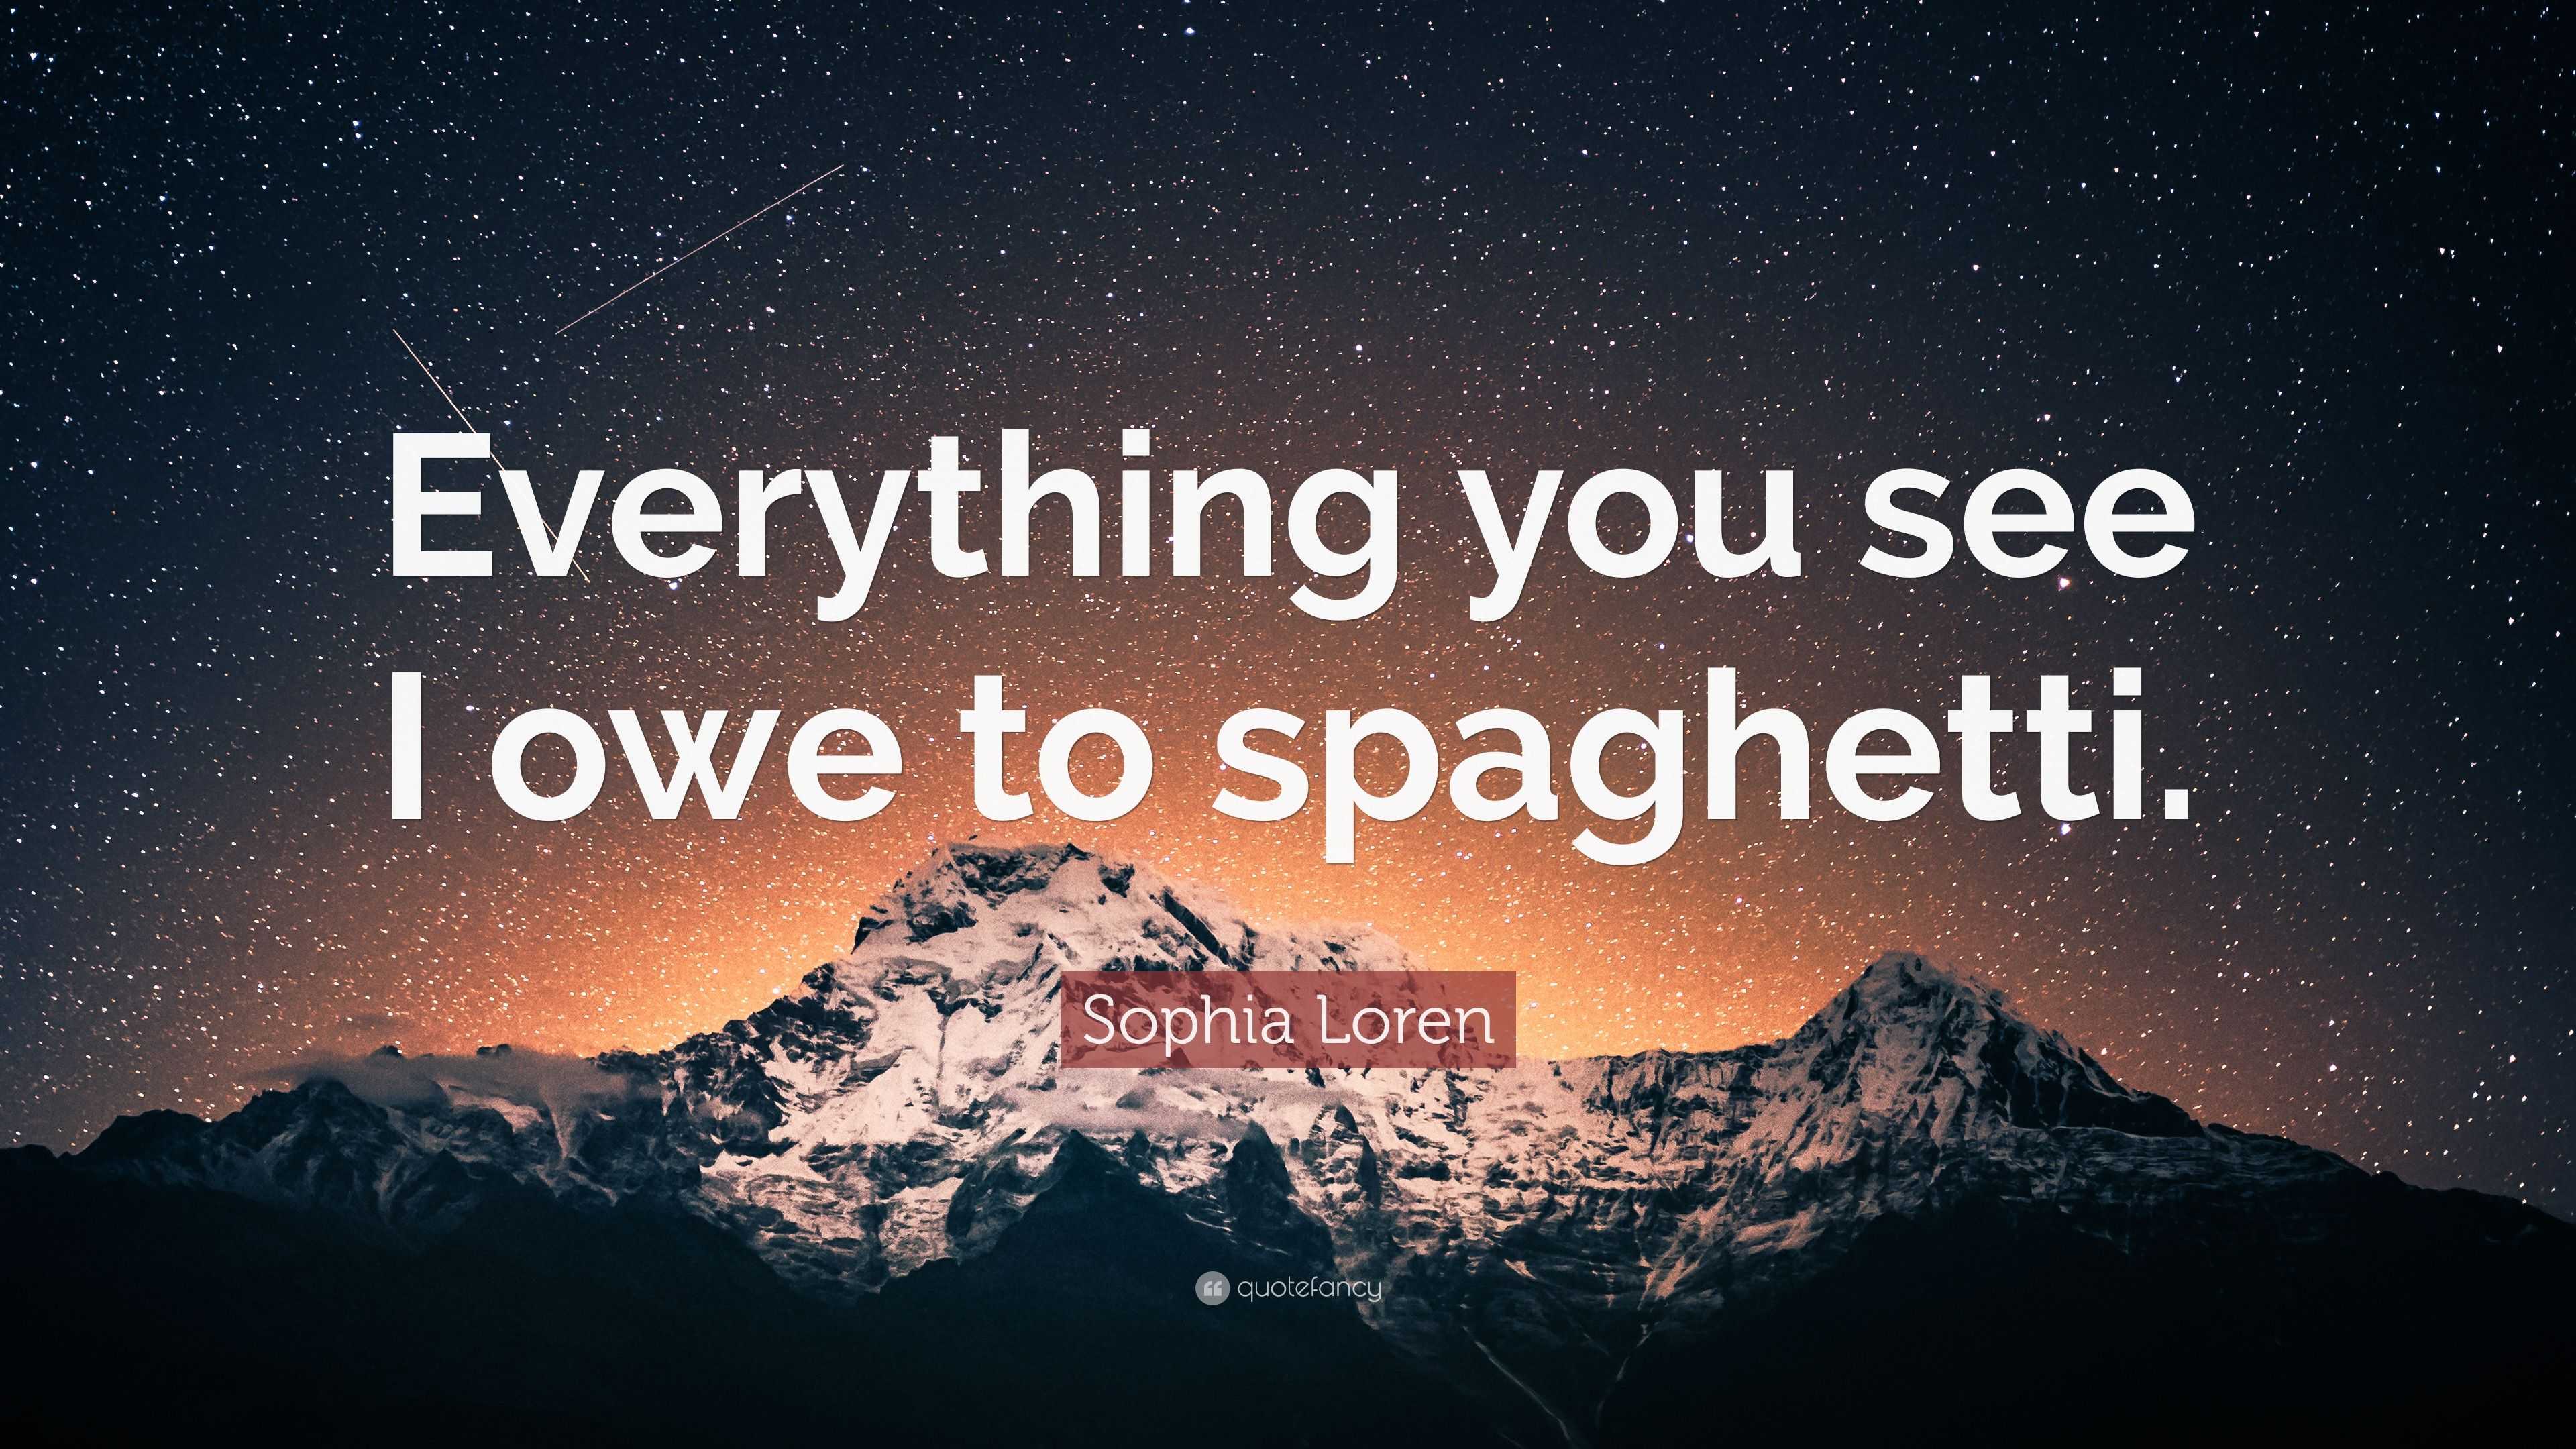 Sophia Loren Quote: "Everything you see I owe to spaghetti ...